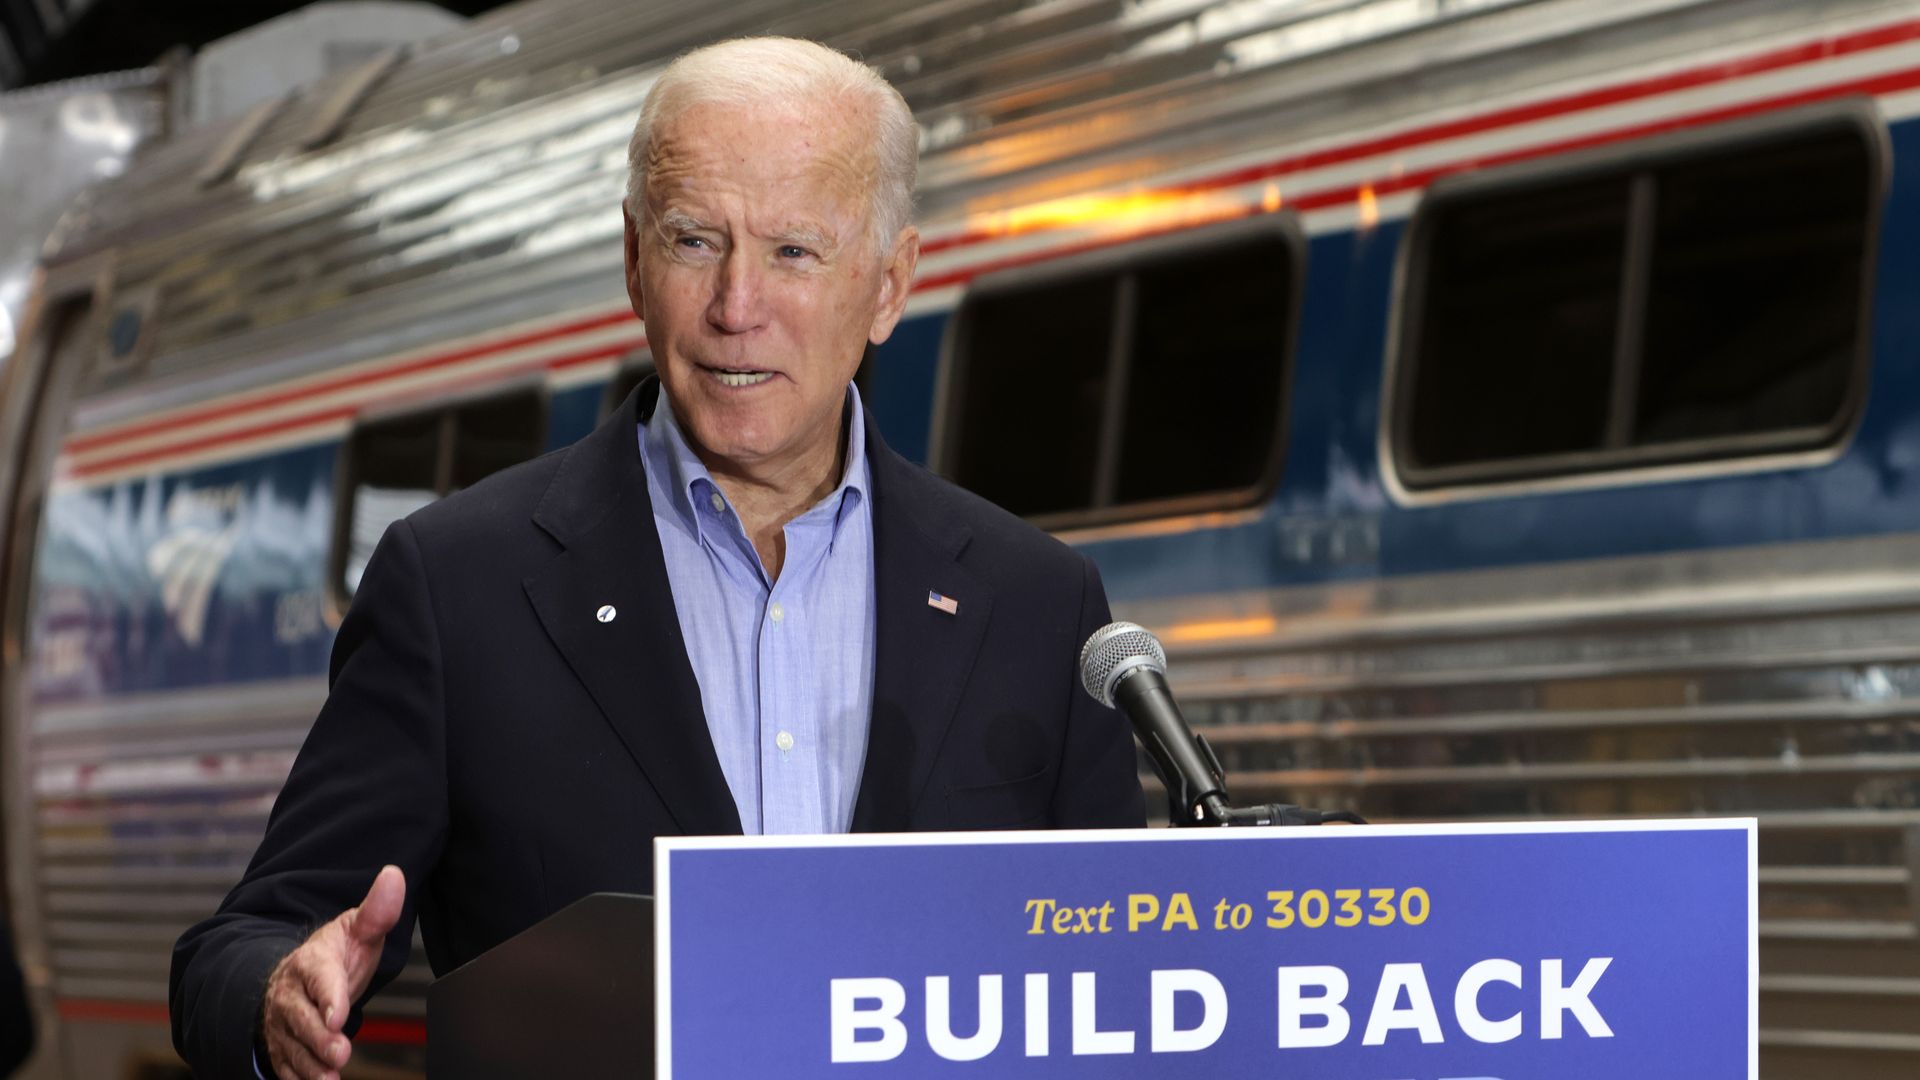 Joe Biden speaks behind a "Build Back Better" sign in Pittsburgh